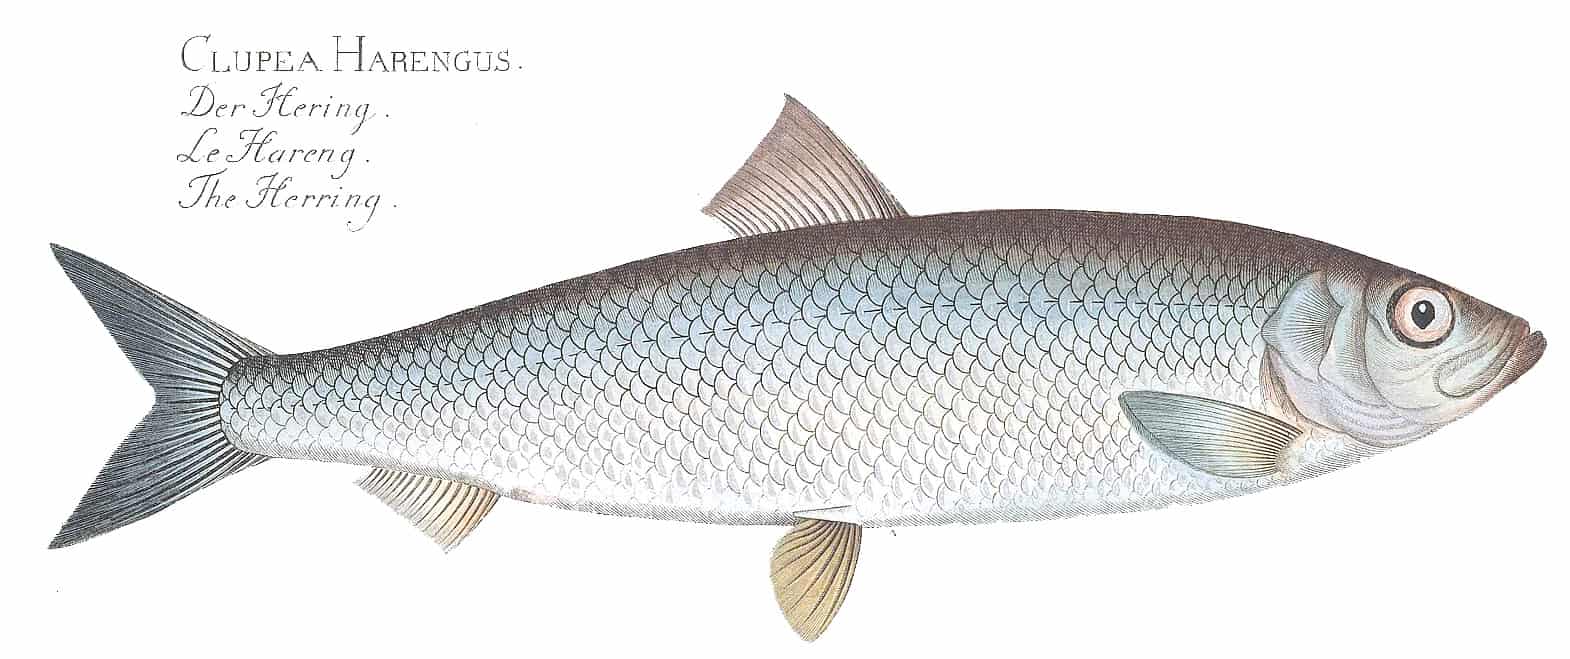 Atlantic herring - Fish of the year 2022